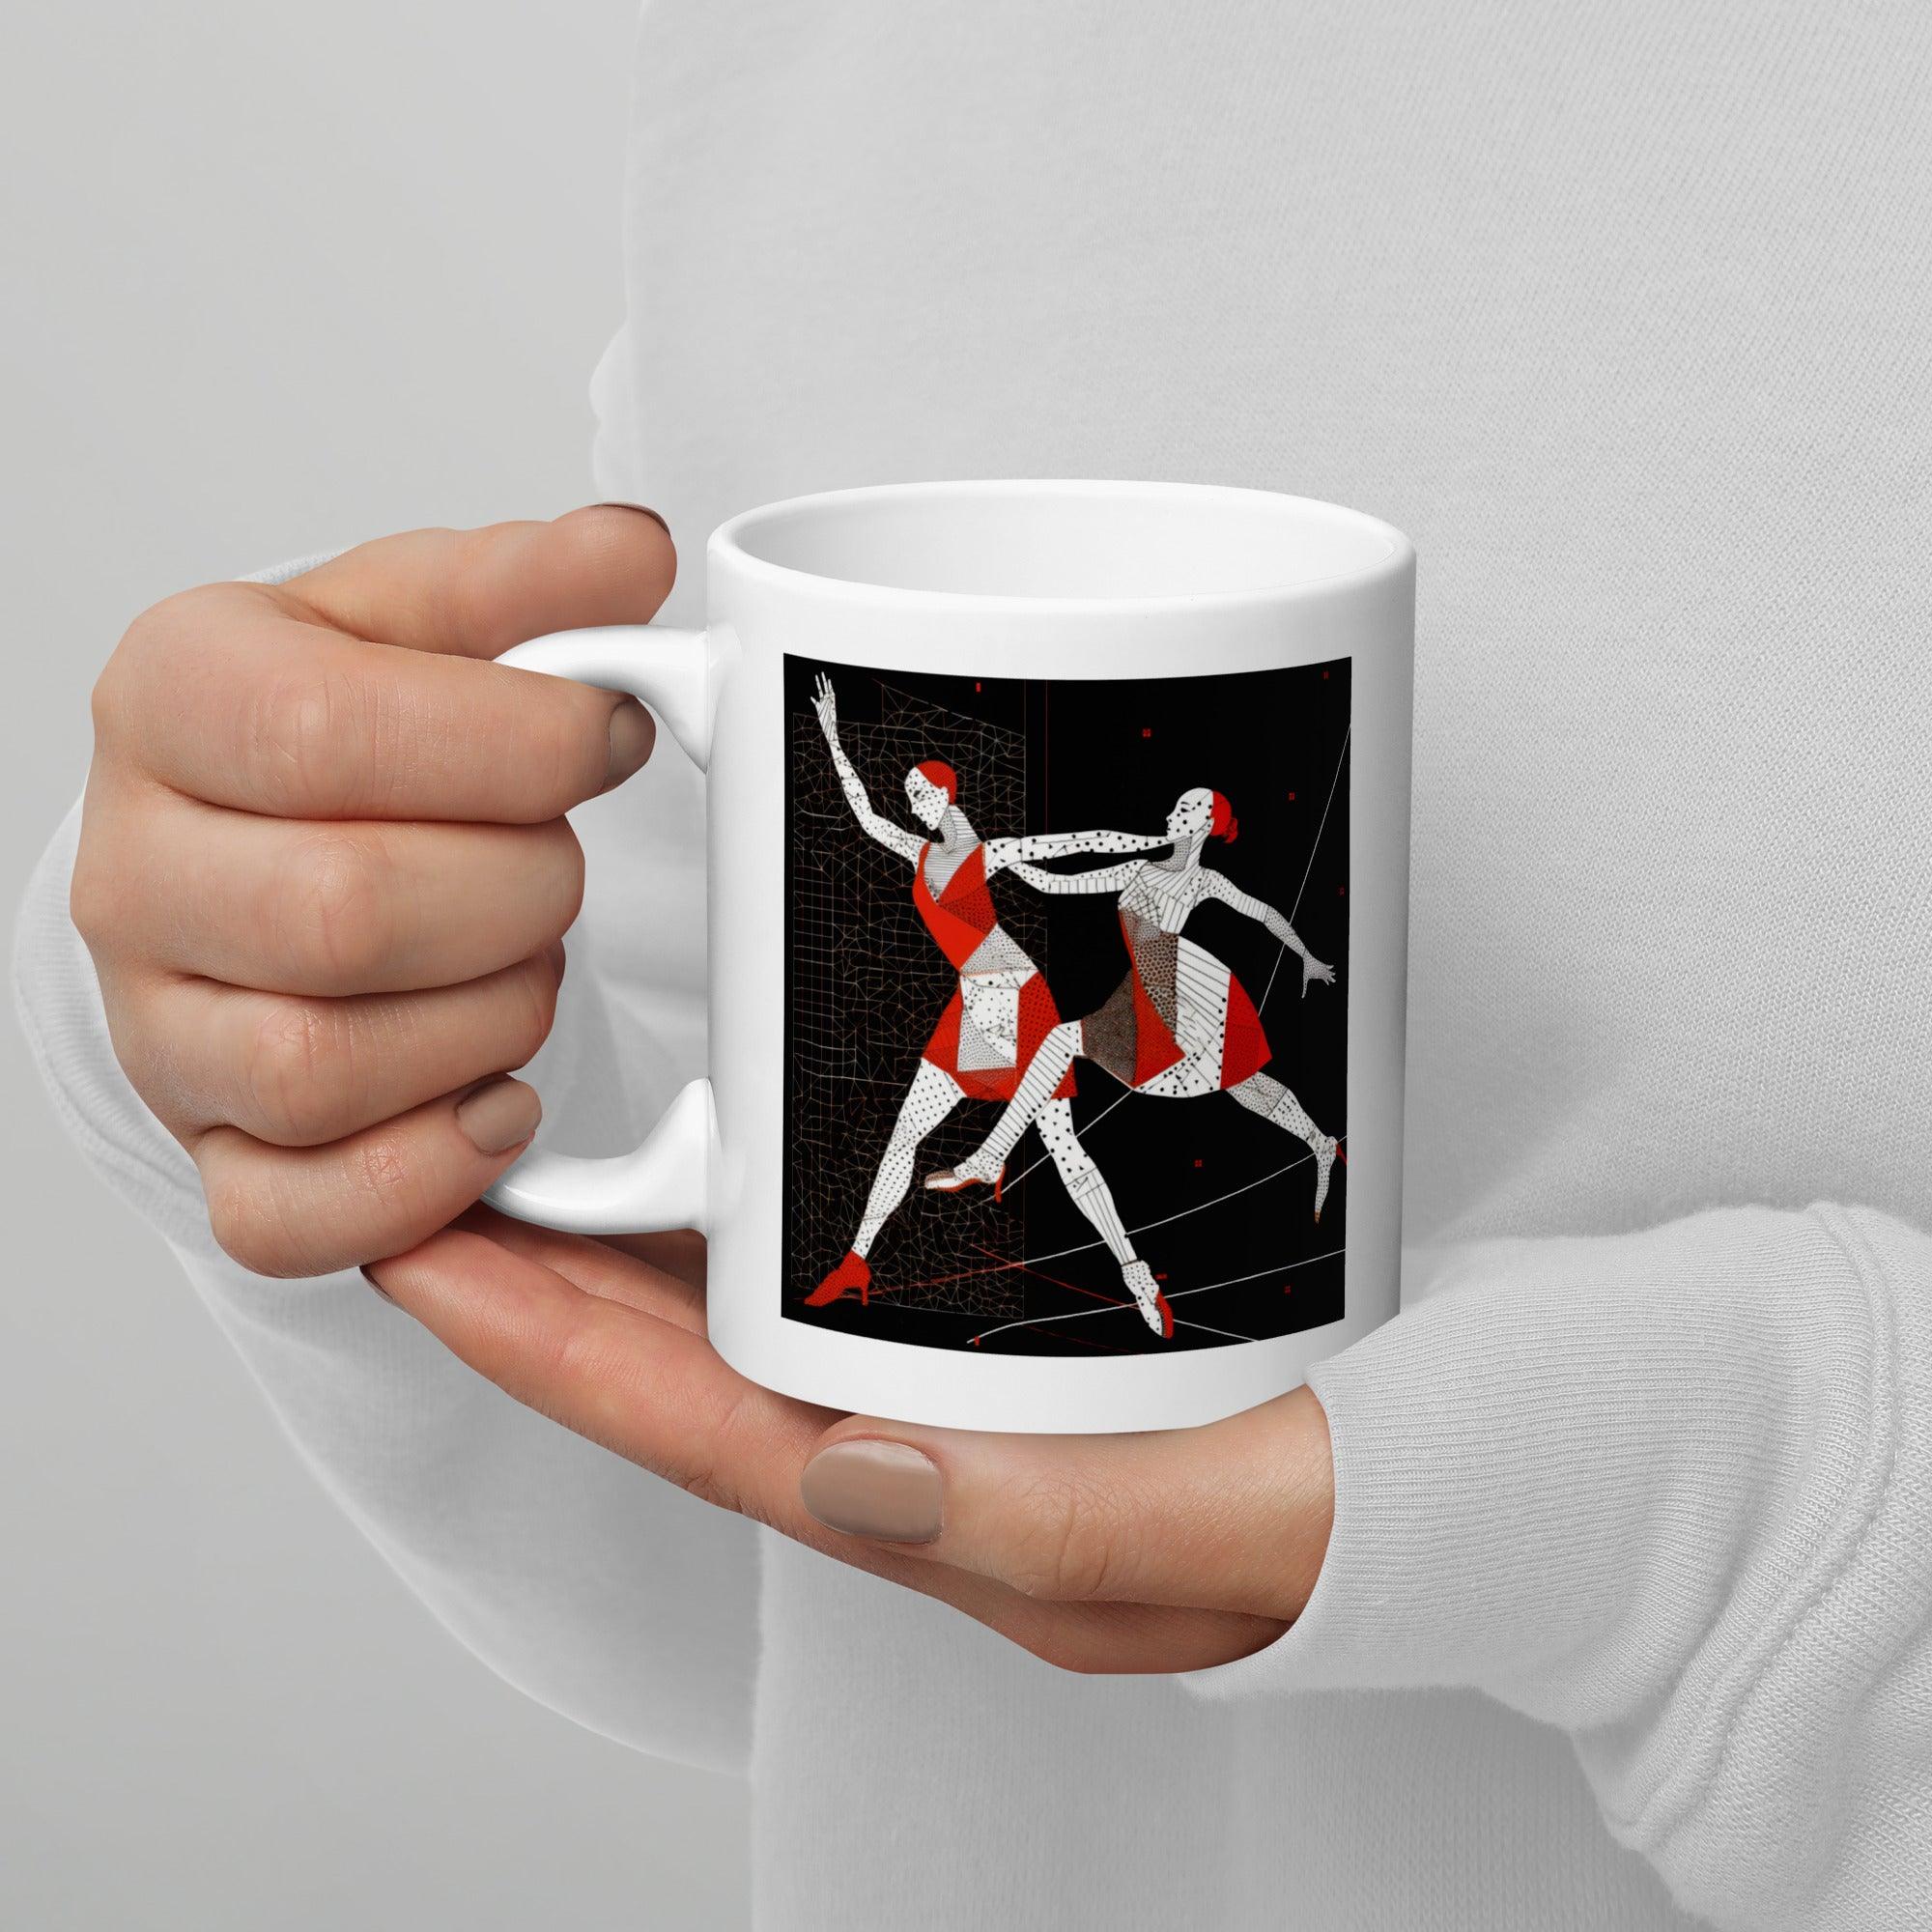 Elegant coffee mug featuring a graceful dancer silhouette.